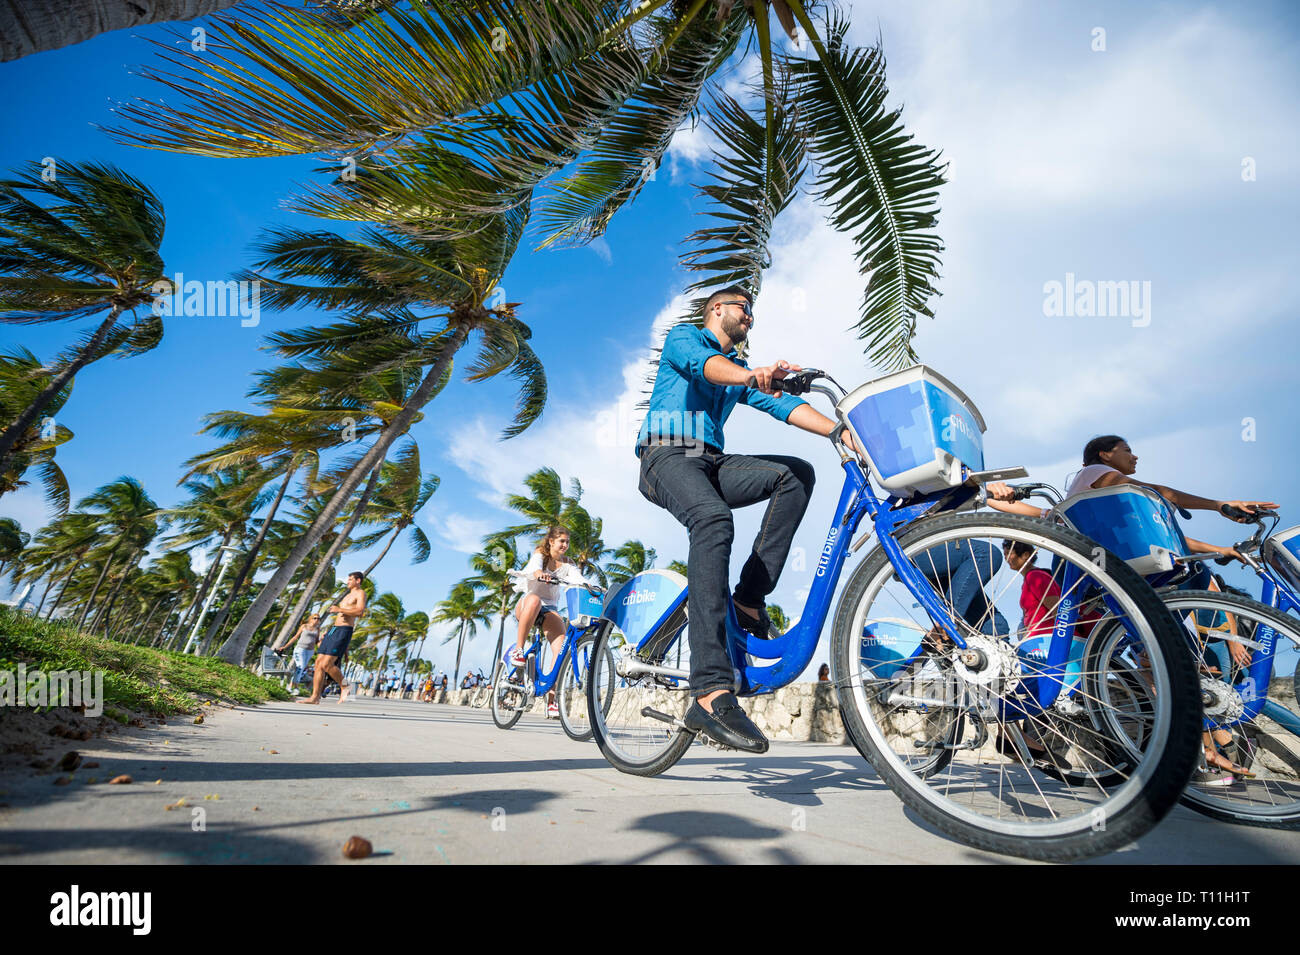 Citi Bike : louer un vélo en libre-service à Miami Beach - Bons